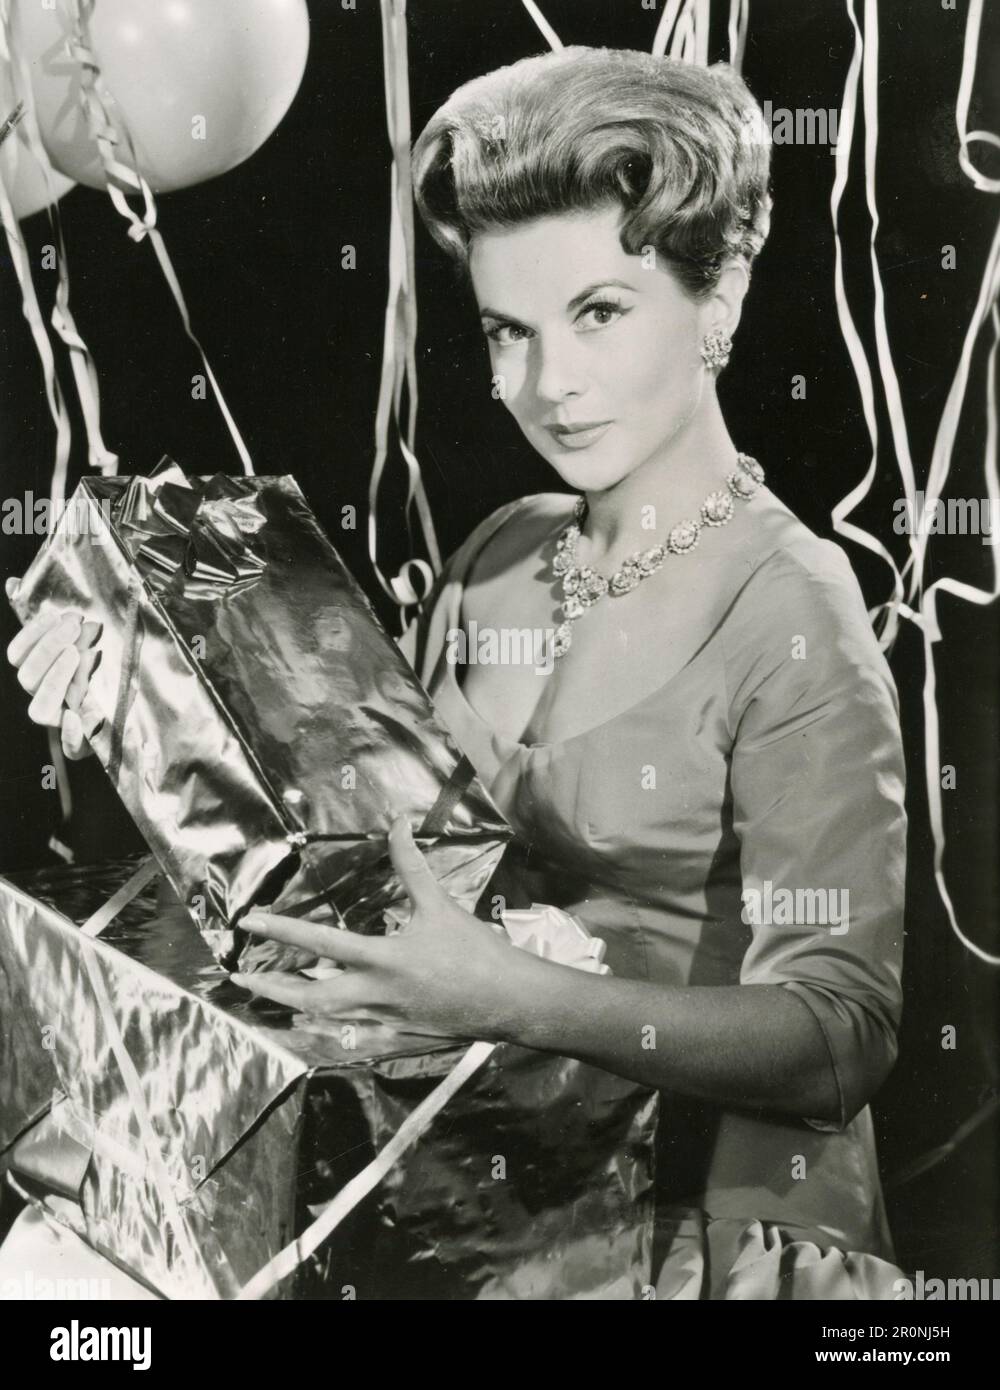 Portrait of French actress Nicole Maurey, 1960s Stock Photo